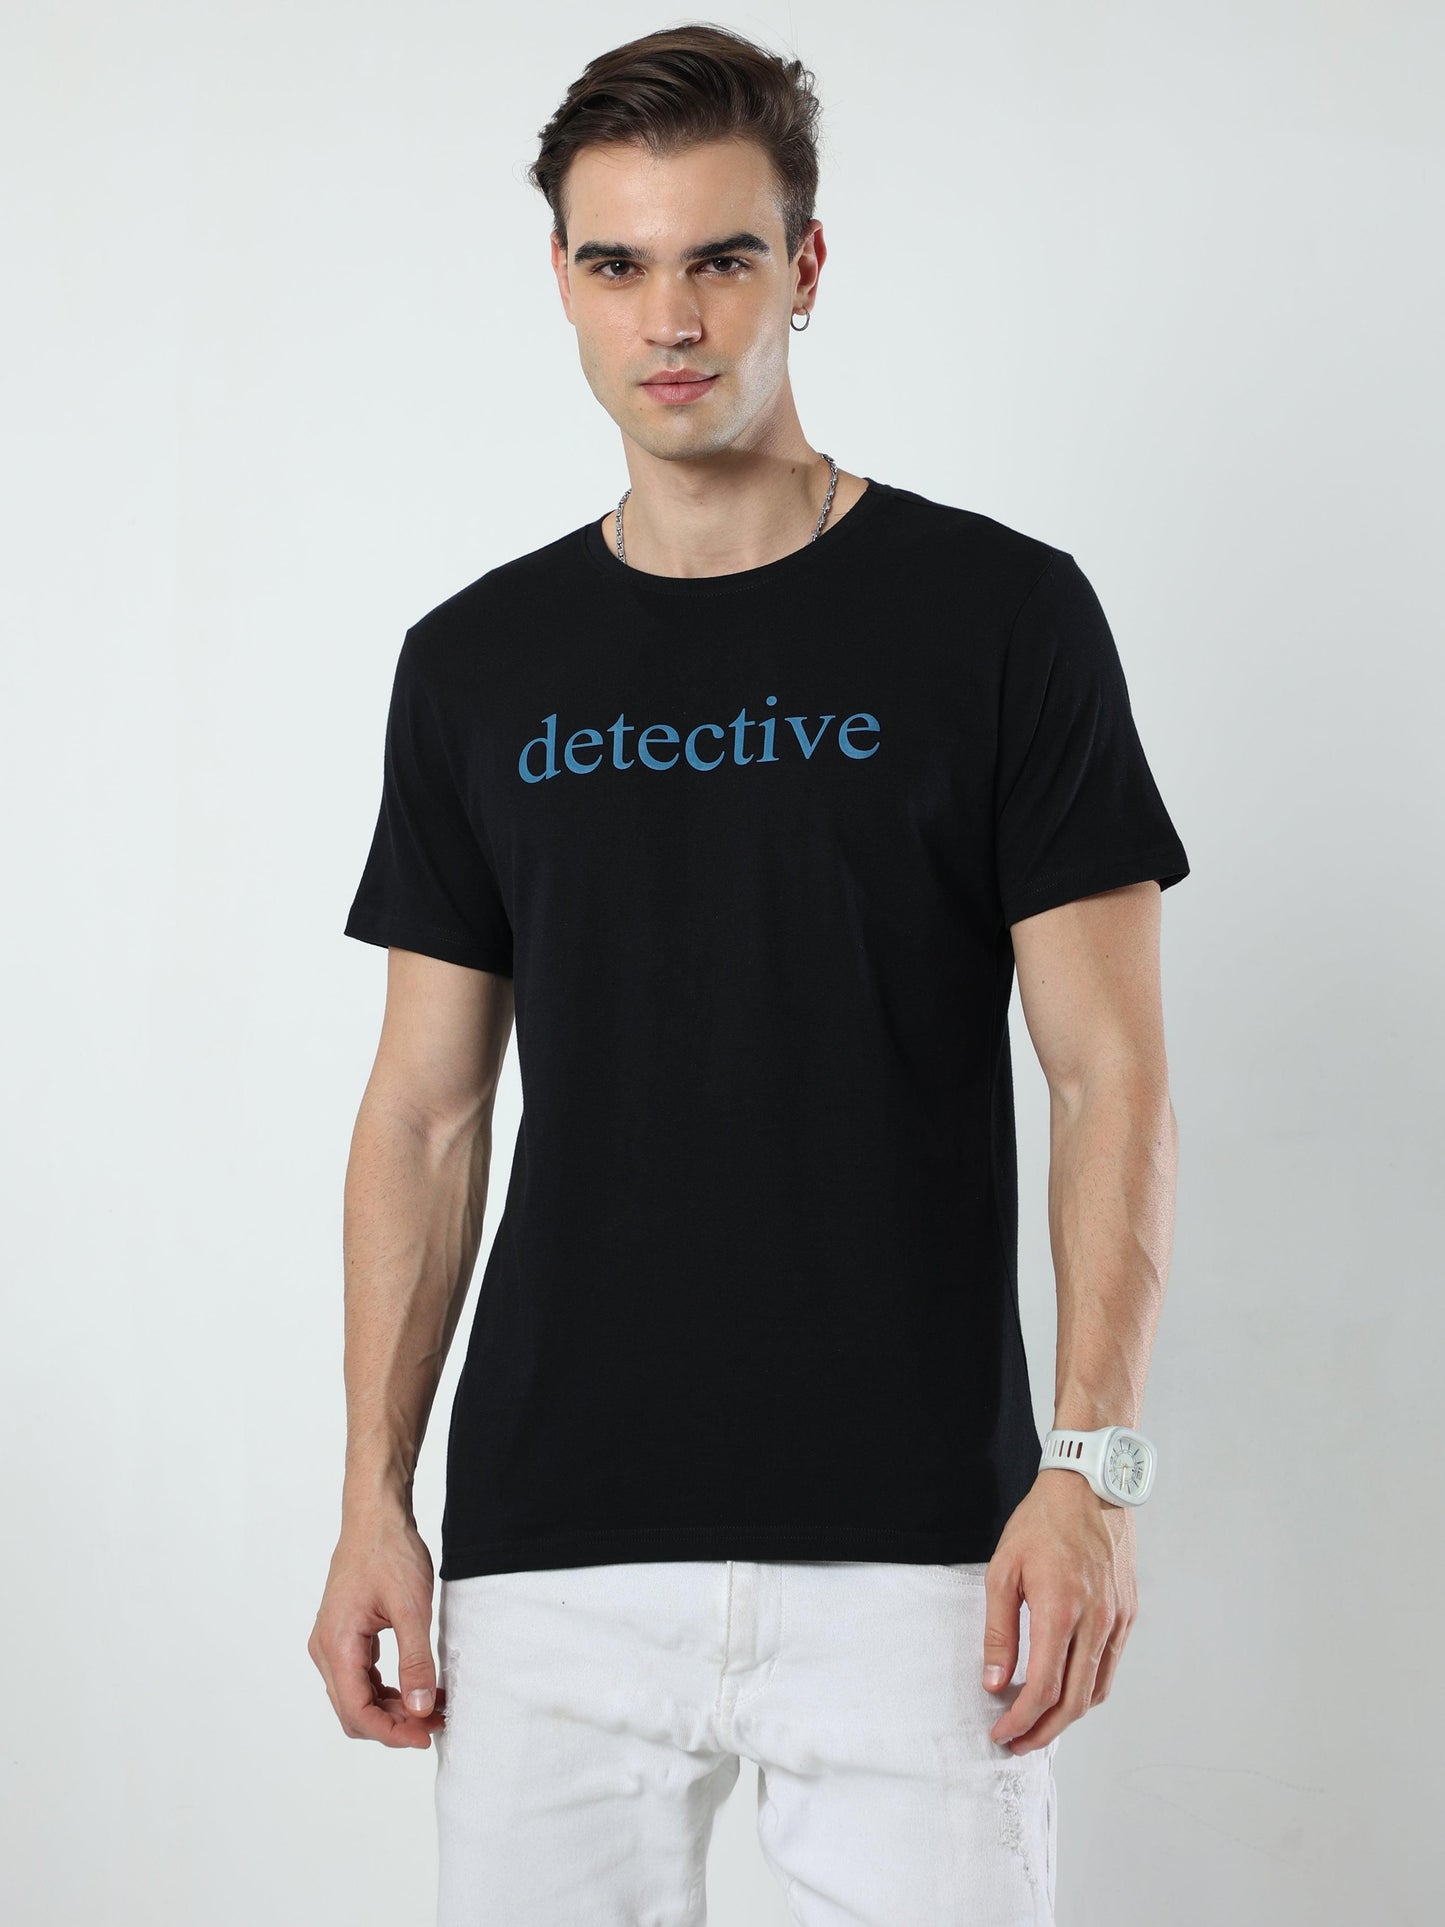 Men's casual T-Shirt - Detective Black